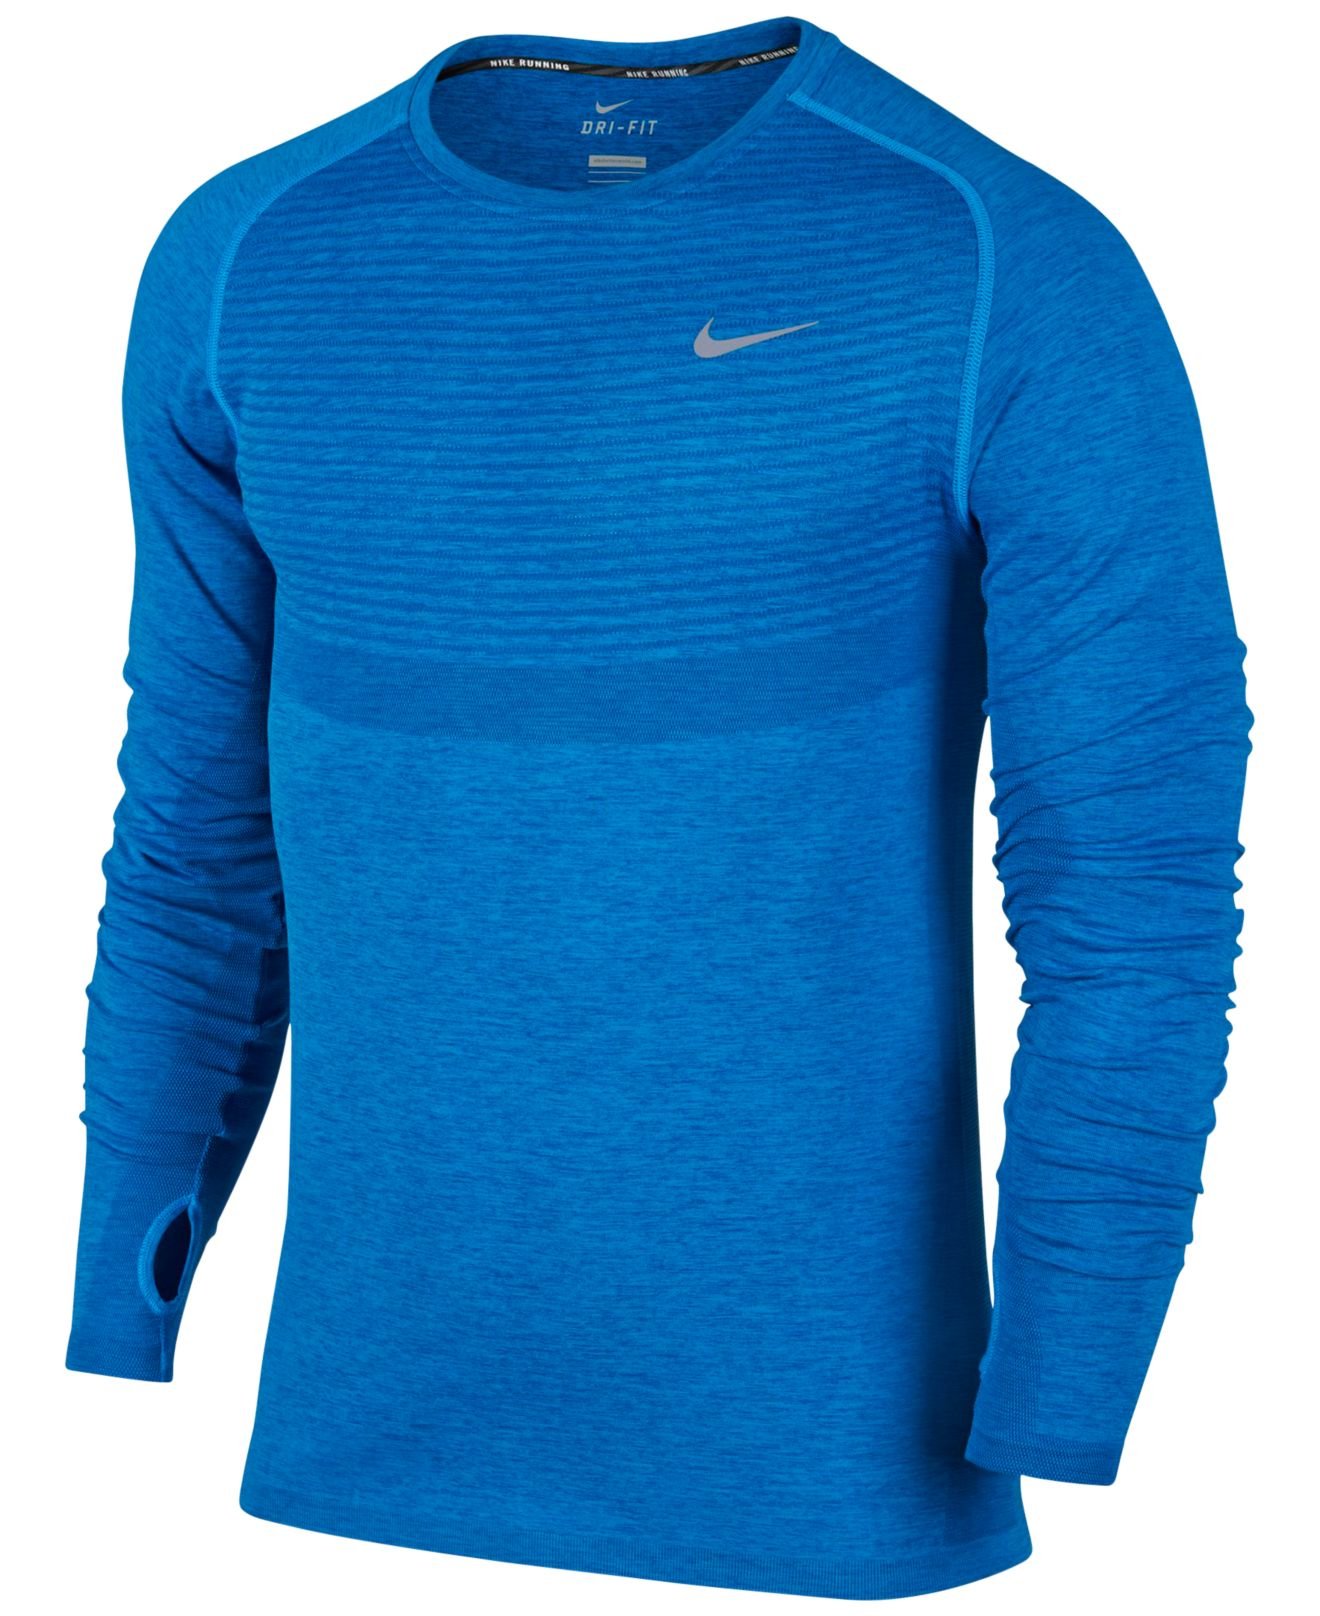 Lyst - Nike Men's Dri-fit Knit Running Long-sleeve Shirt in Blue for Men